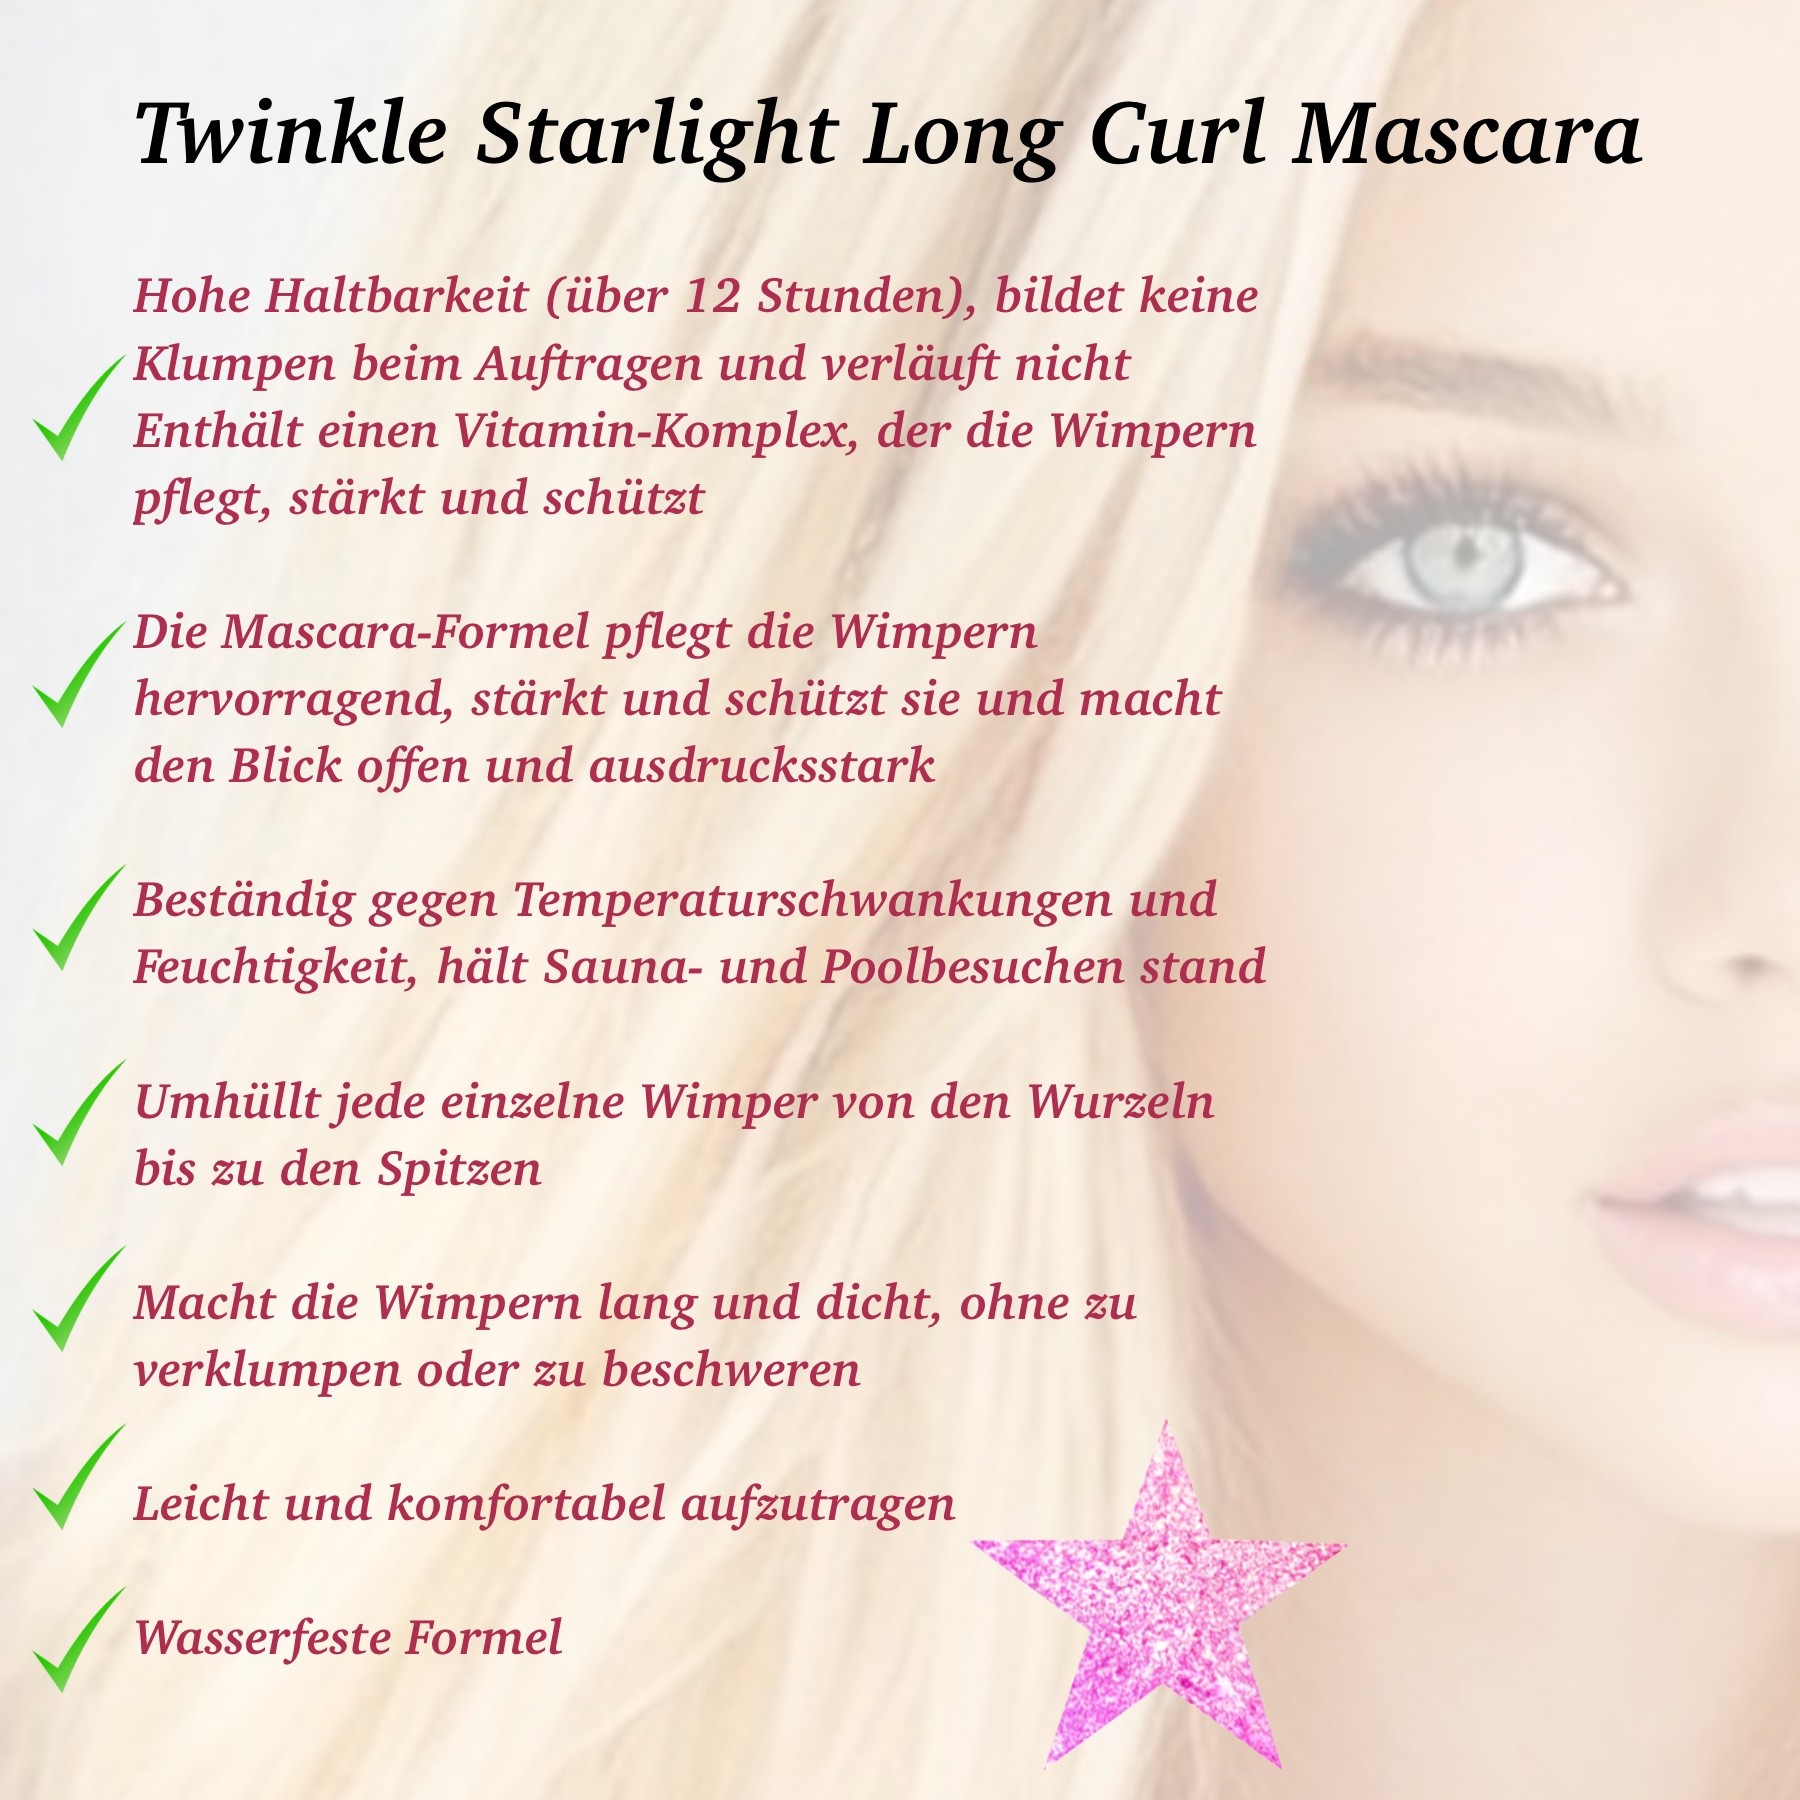 4D Twinkle Starling Long Curl Volumen Mascara Wimperntusche Schwarz mit Silikon Bürste